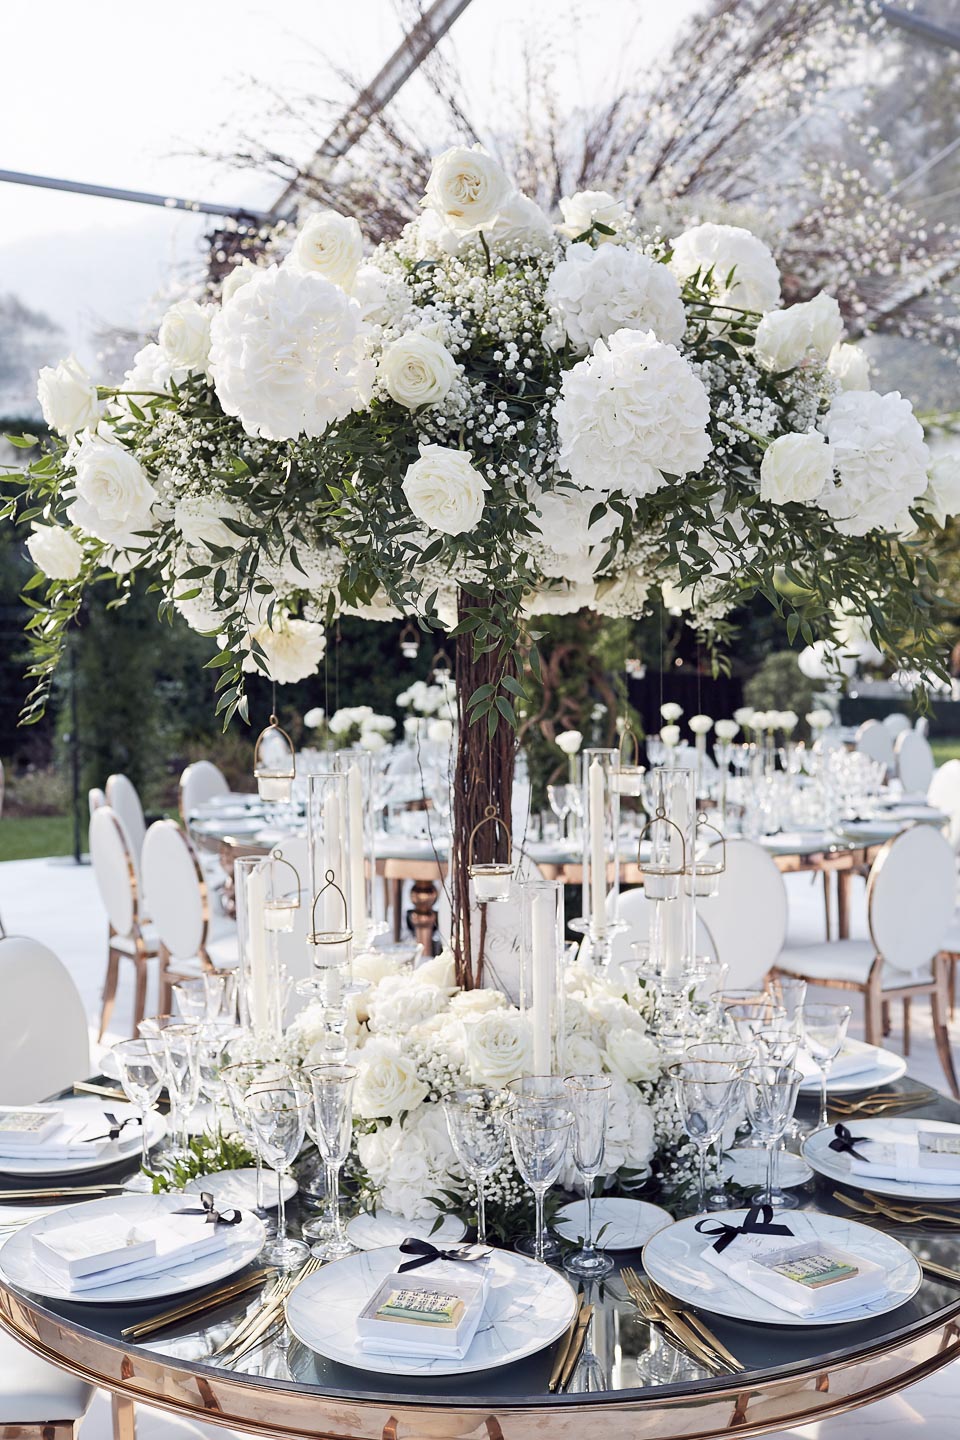 villa balbiano luxurious lake como italian wedding venue best wedding table decor floral centerpiece